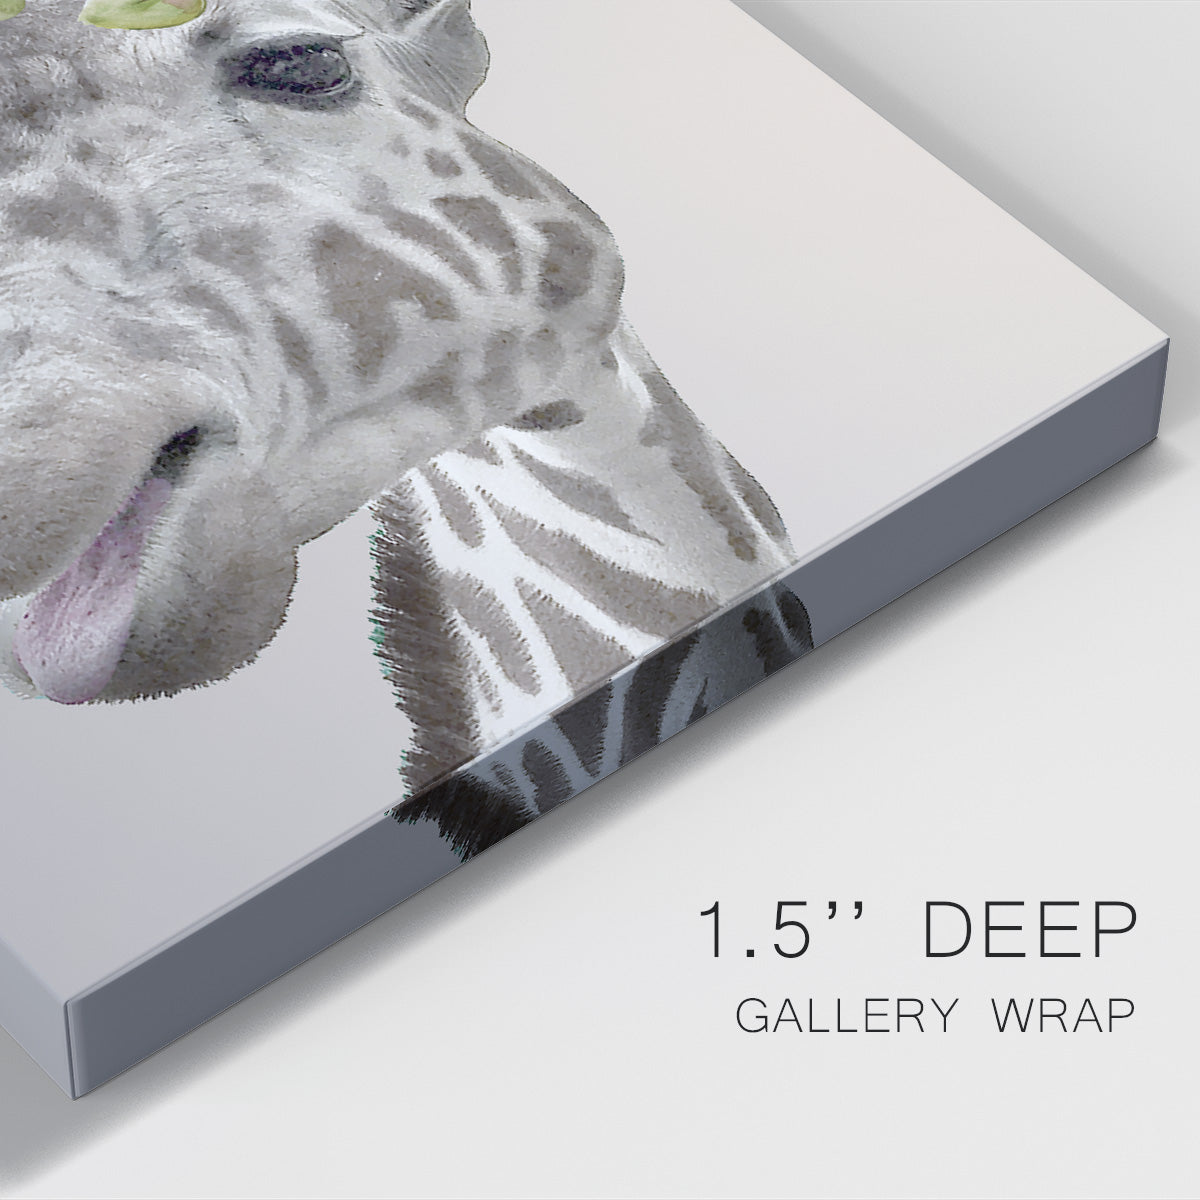 Peek A Boo Giraffe I Premium Gallery Wrapped Canvas - Ready to Hang